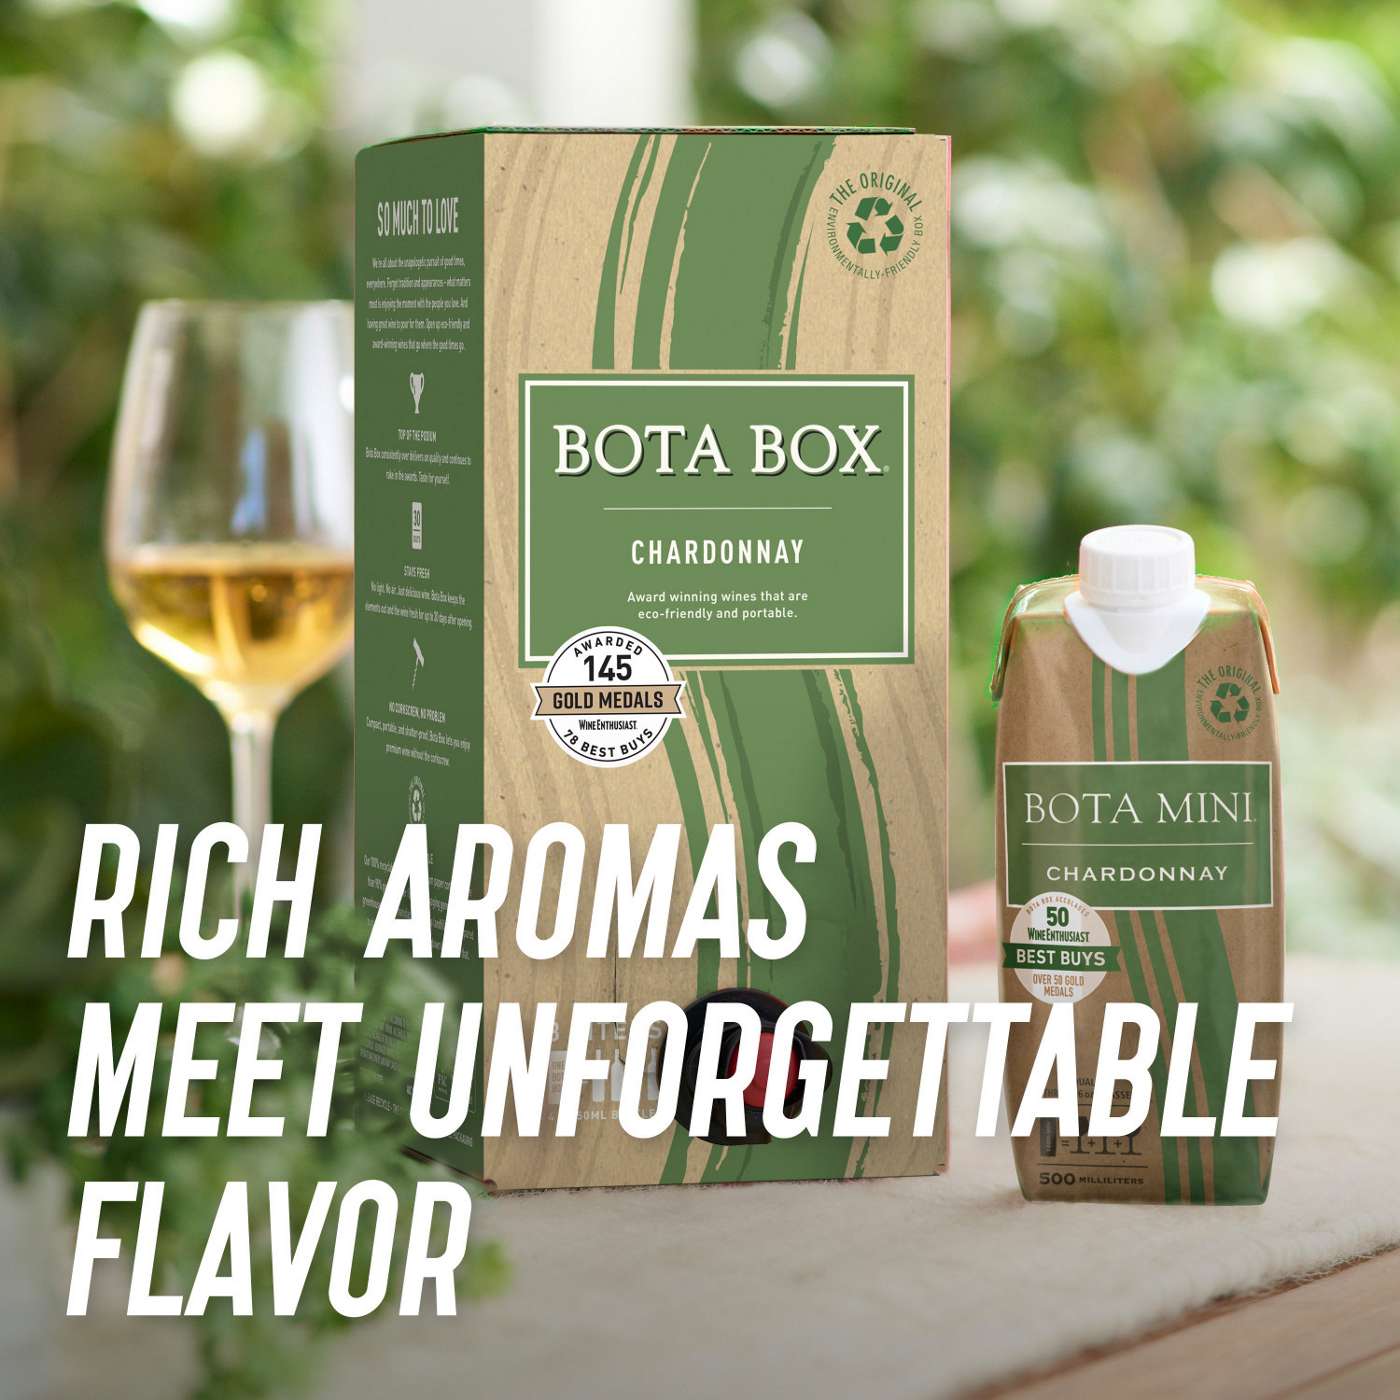 Bota Box Chardonnay; image 3 of 4